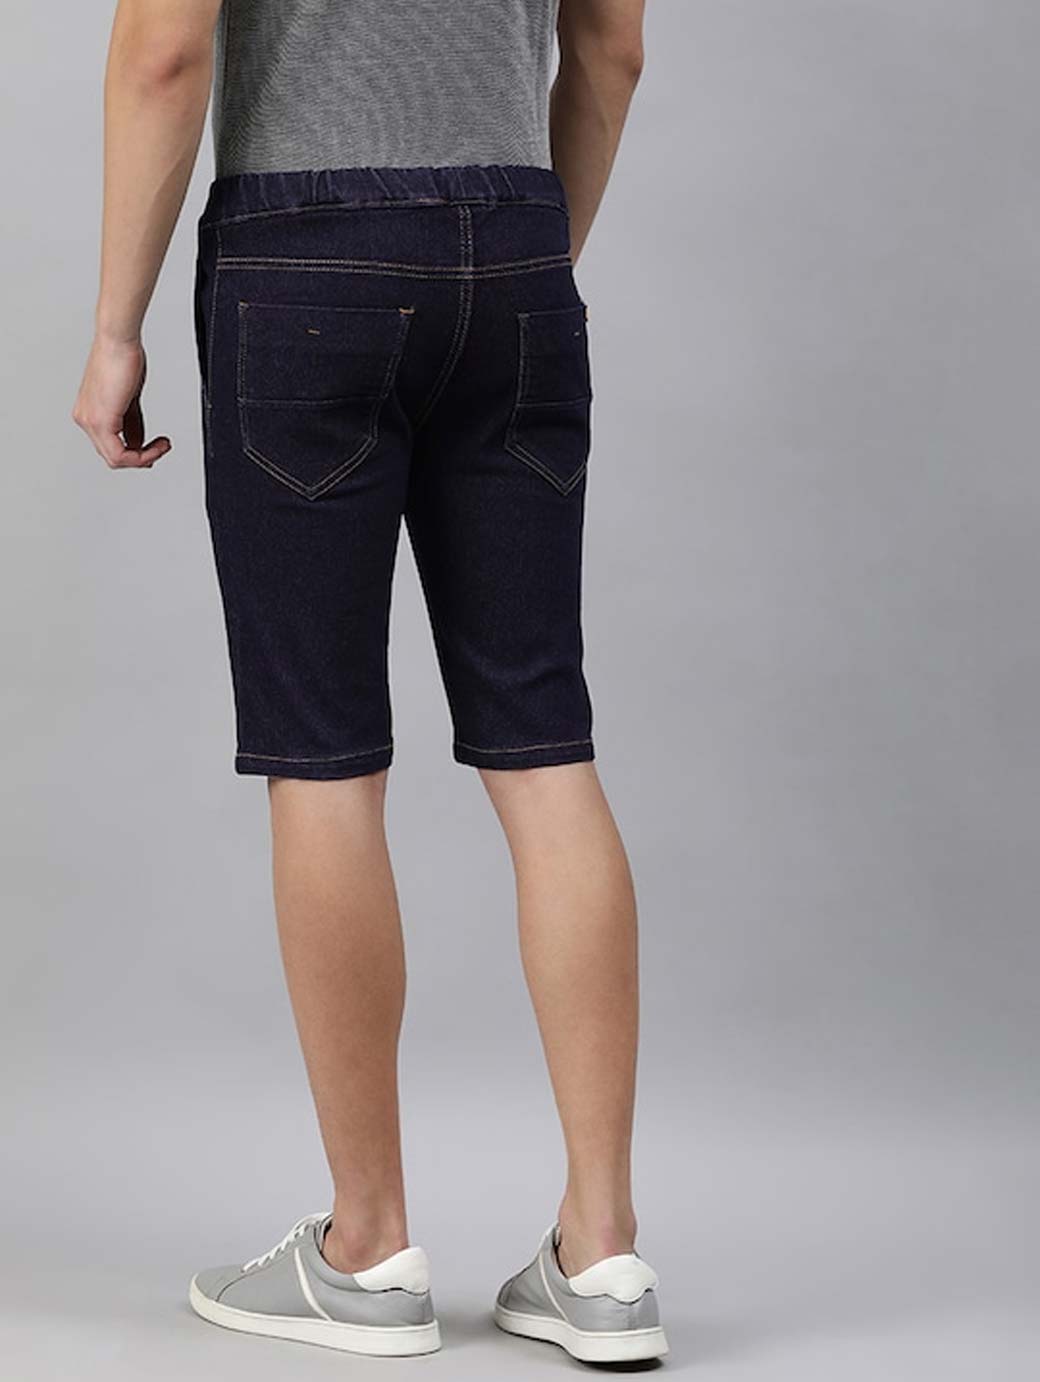 Slim Fit Denim Shorts - Light denim blue - Men | H&M US